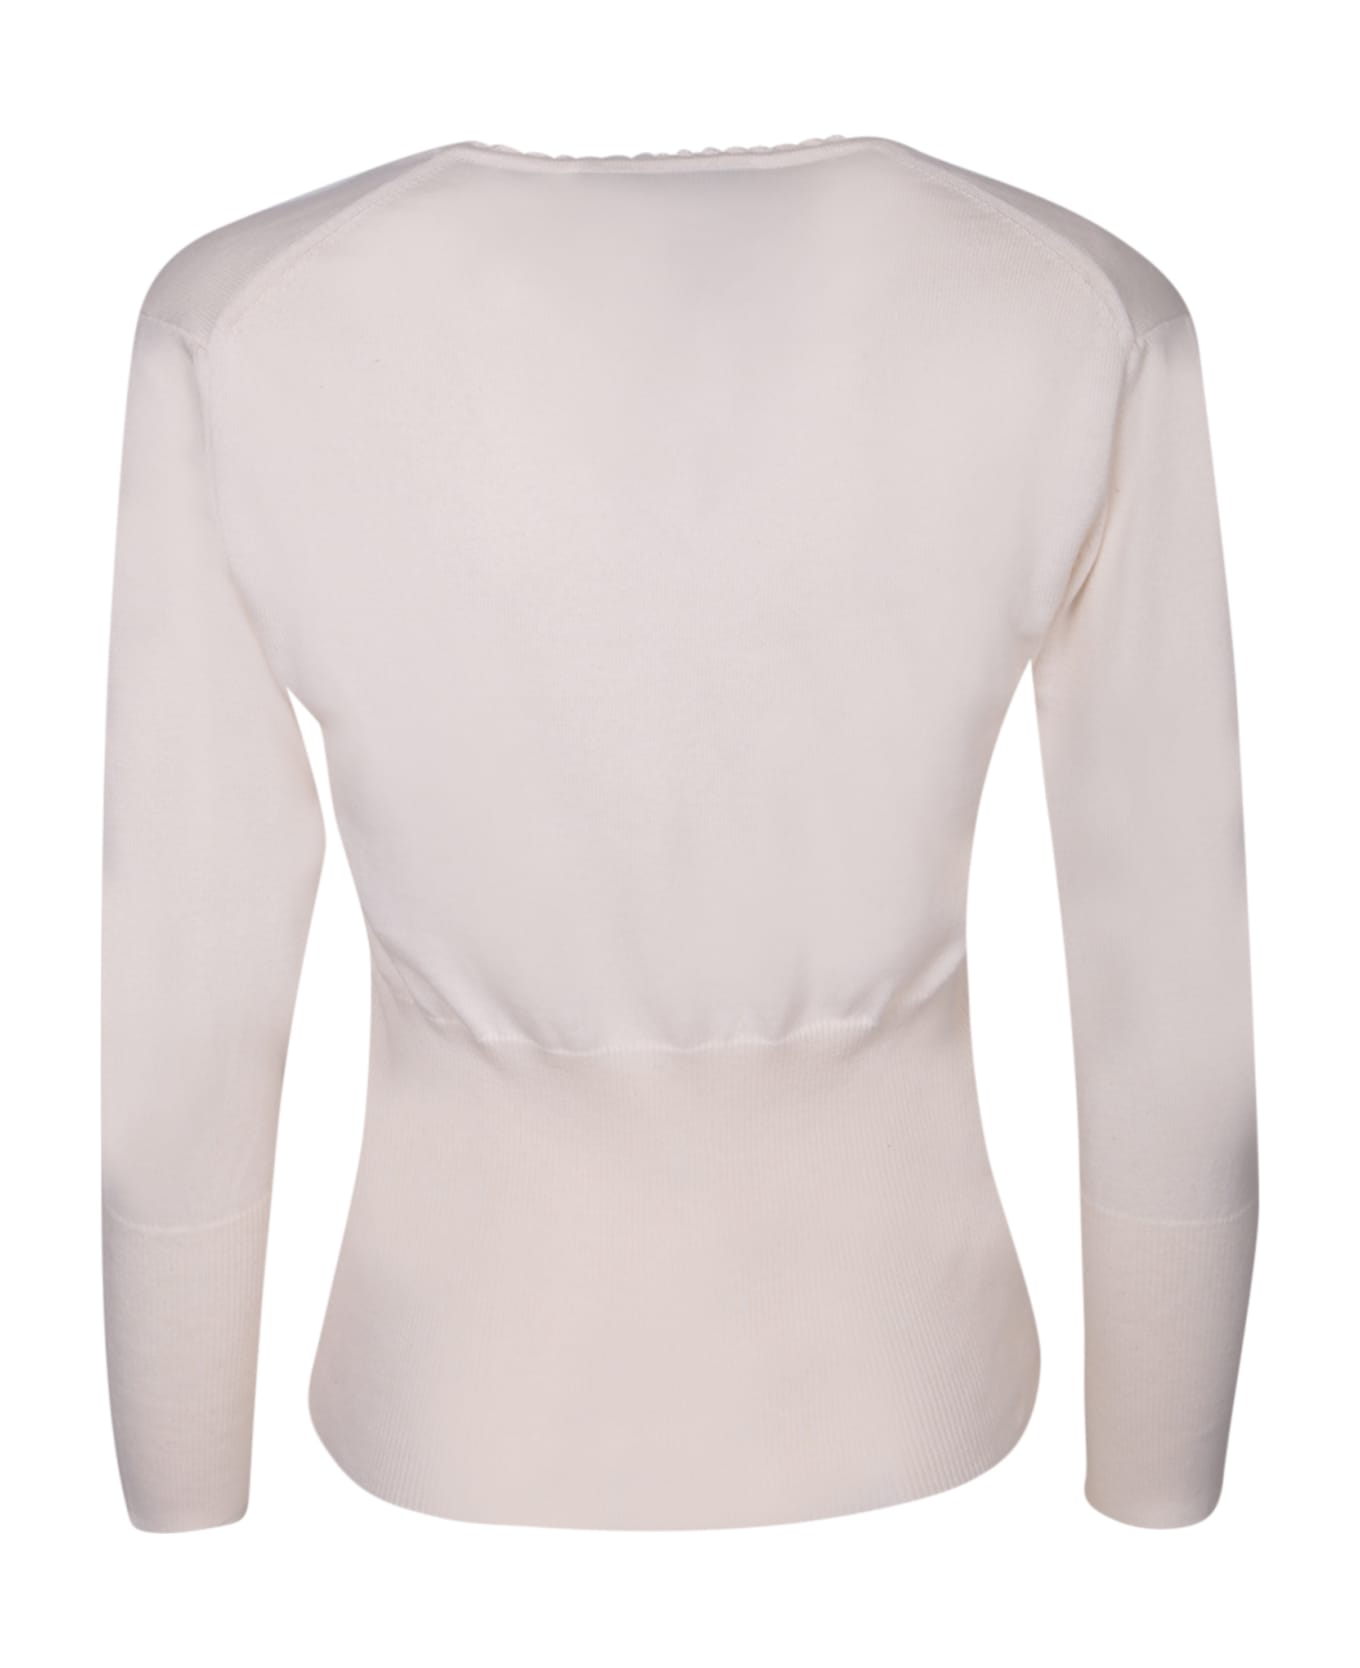 Vivienne Westwood Bebe Cream Sweater - White